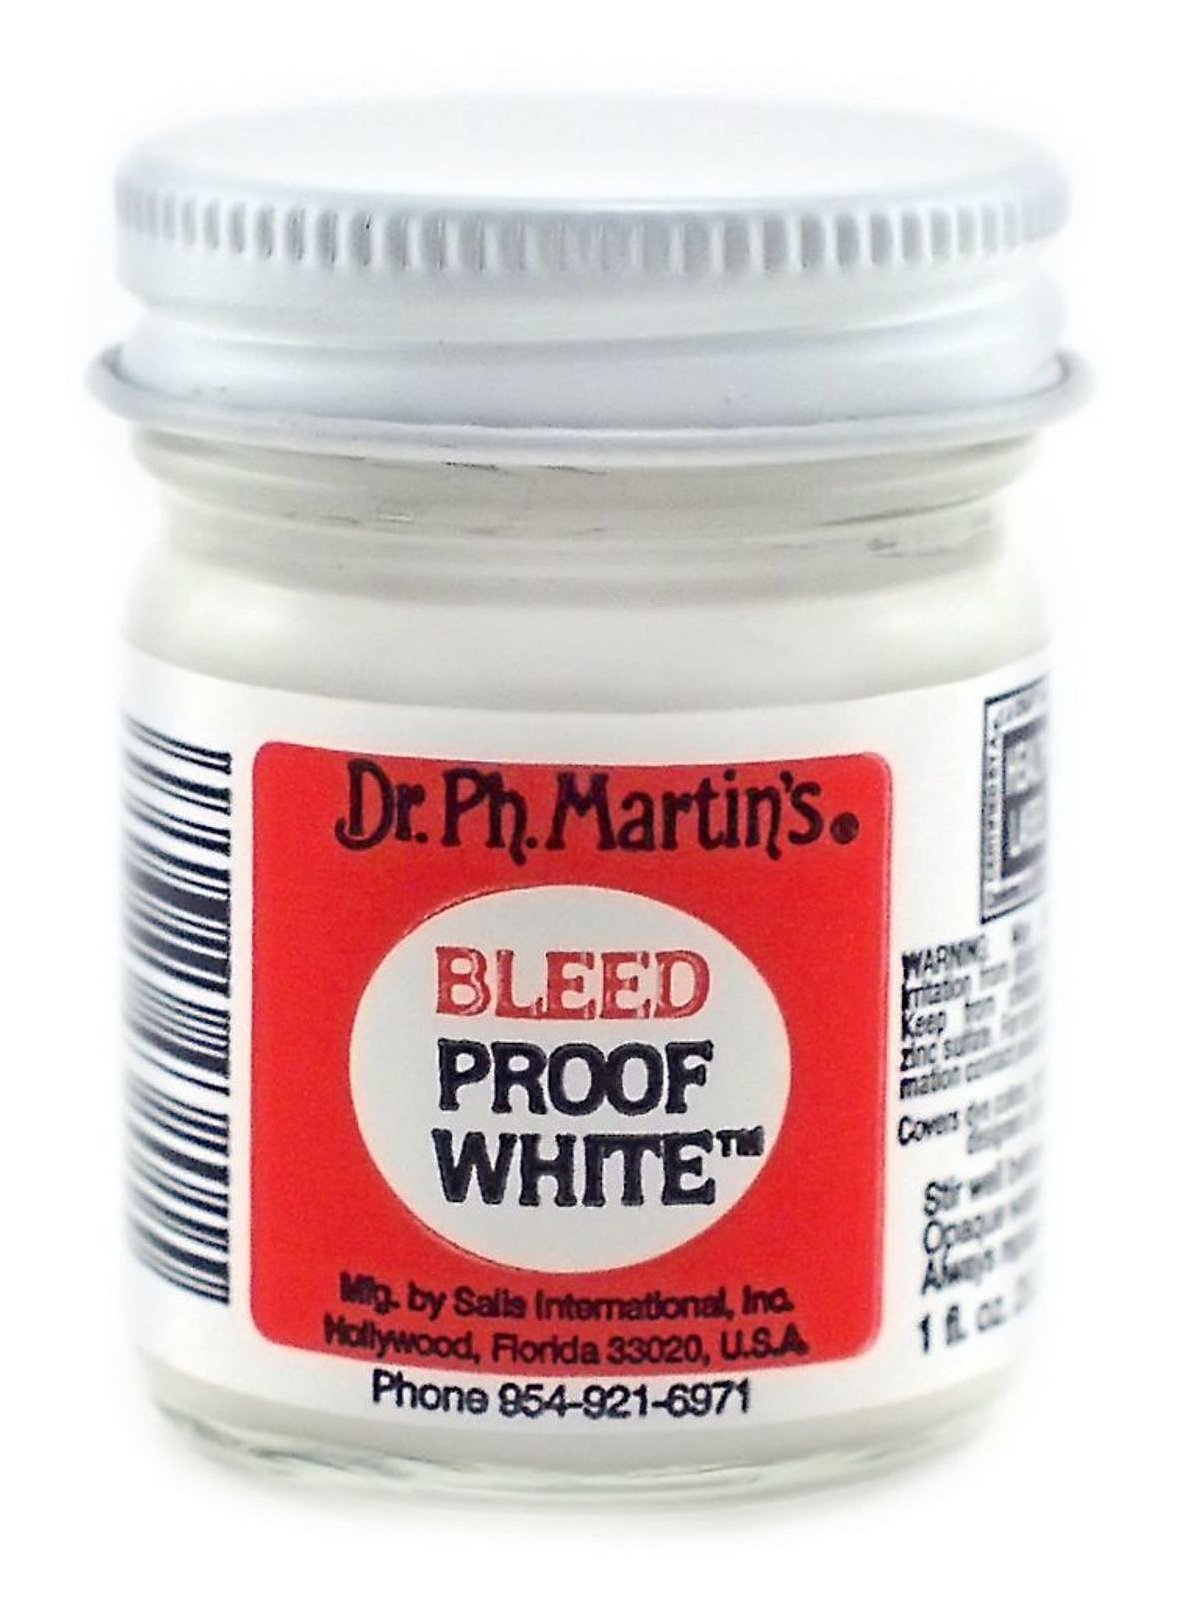 Dr Ph Martin Bleed Proof White – Handwrite House